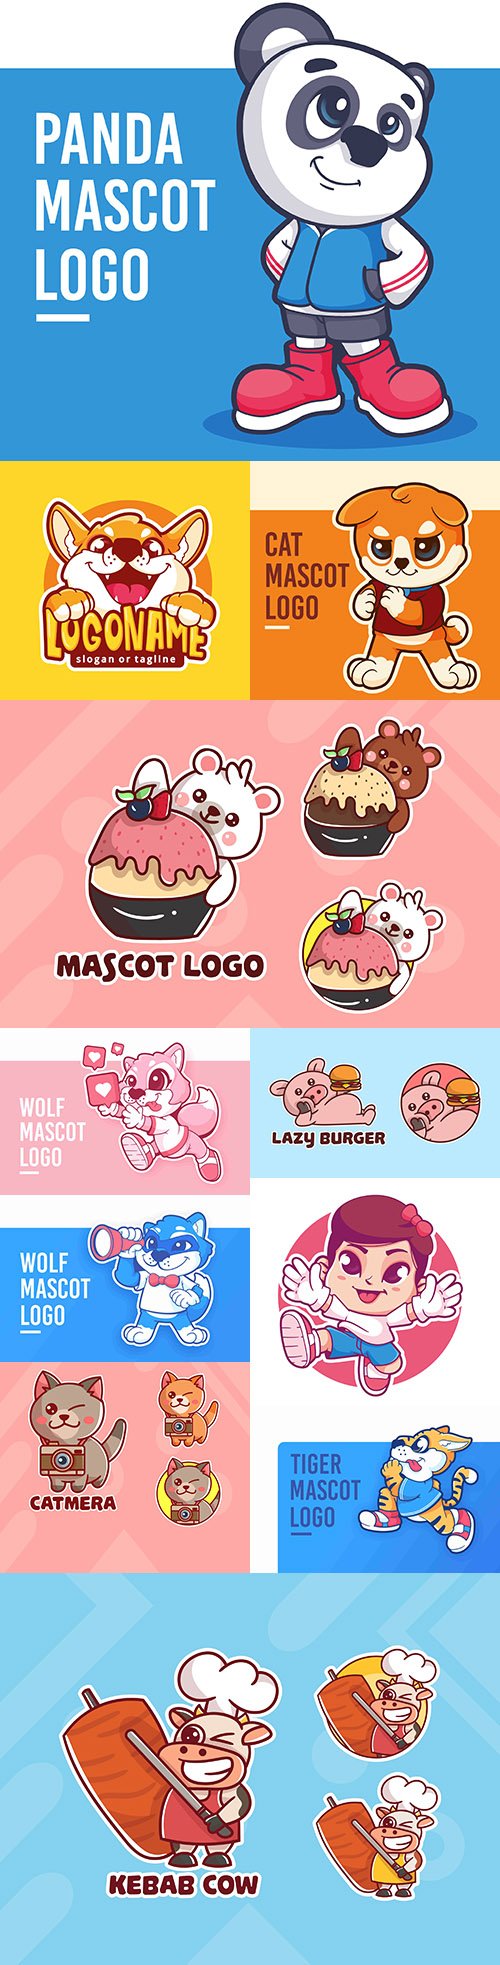 Emblem mascot and Brand name logos design 16